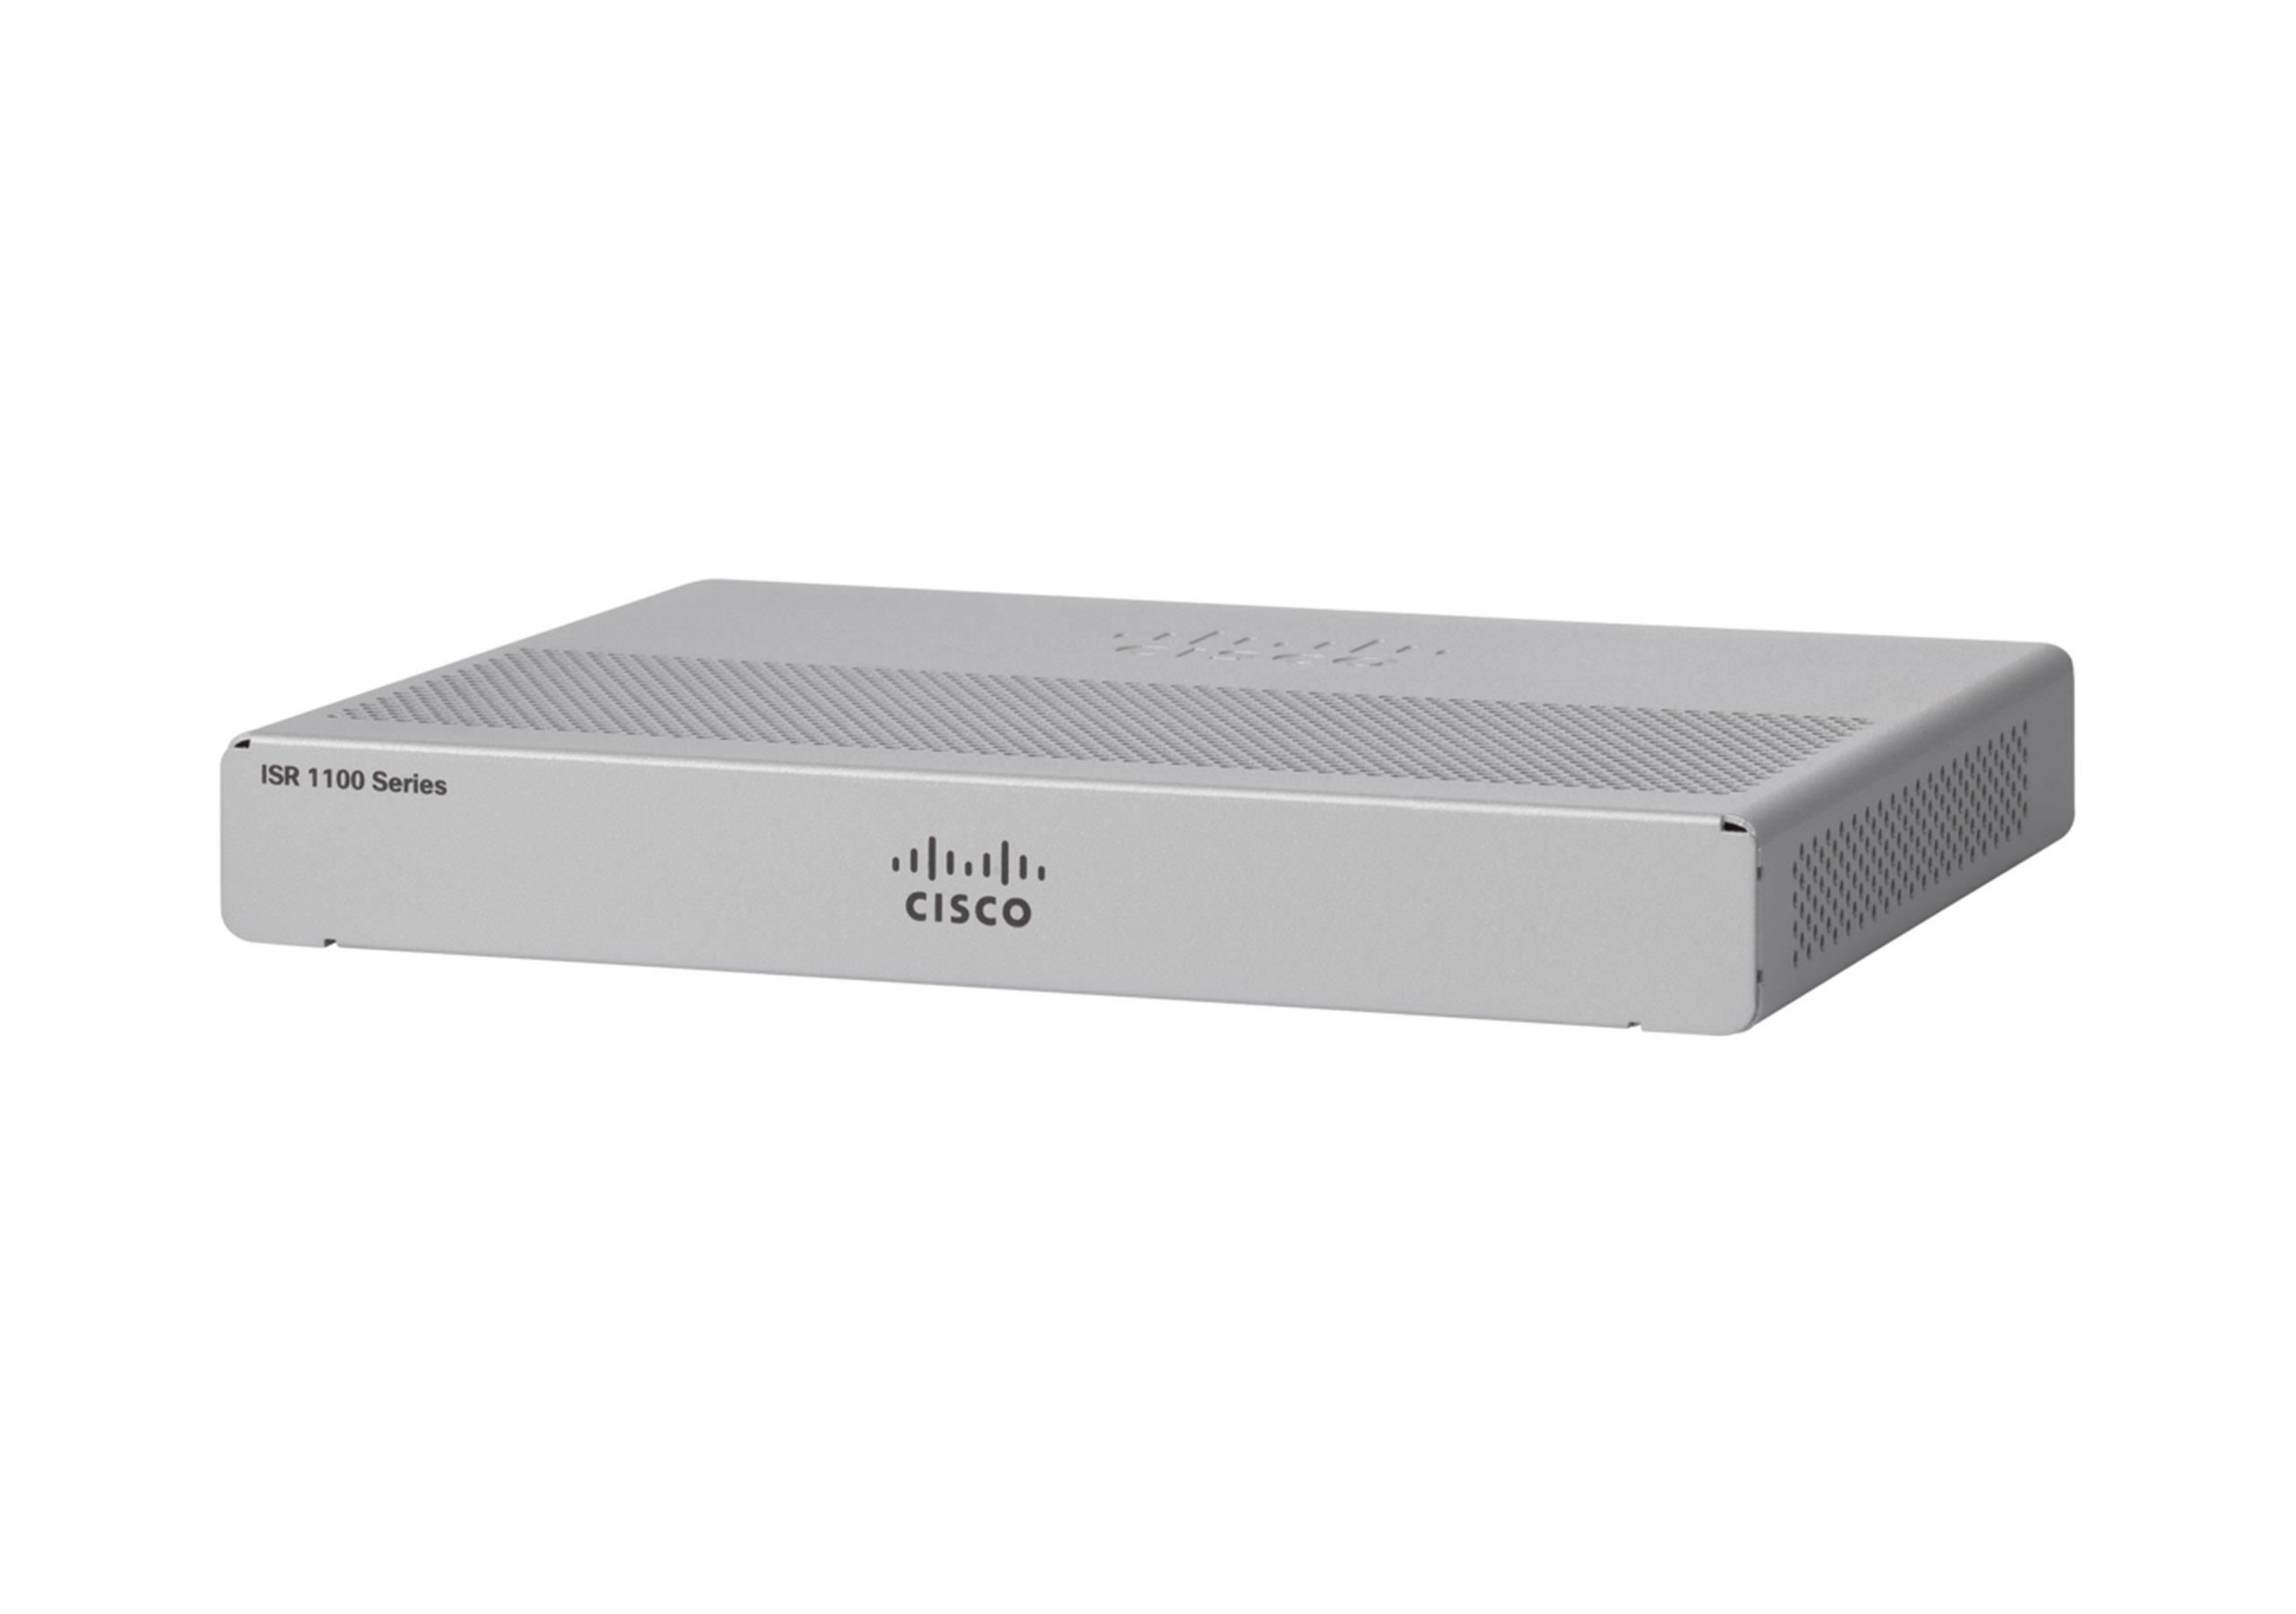 Cisco C1101-4P Routing High